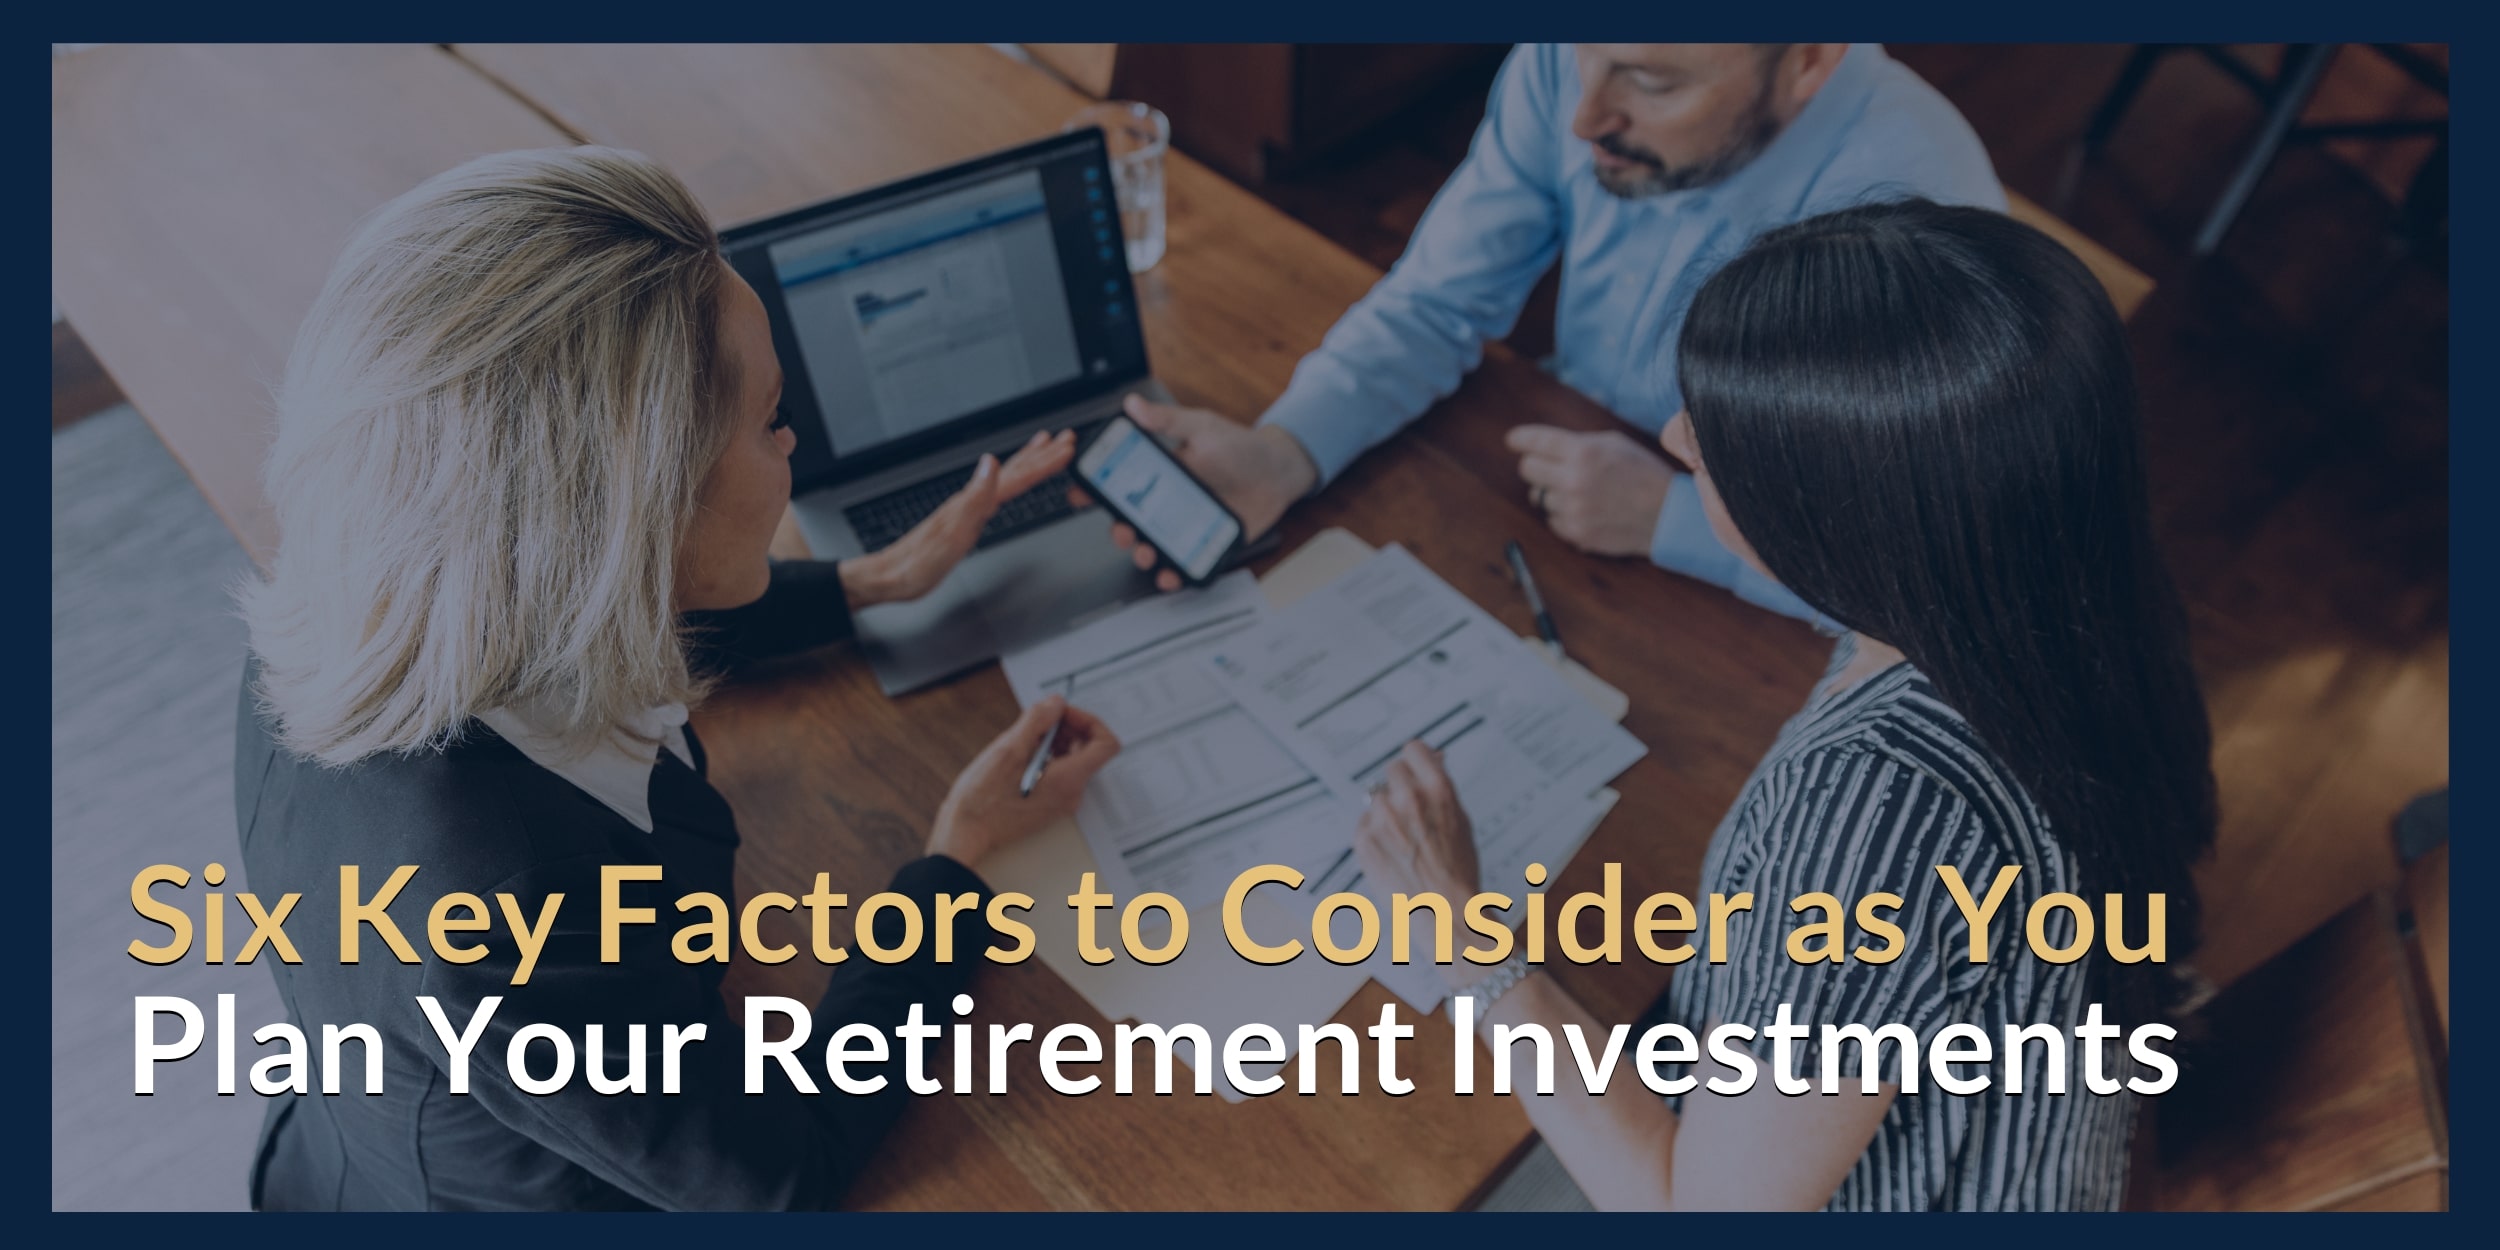 Six Key Factors for Retirement Investments